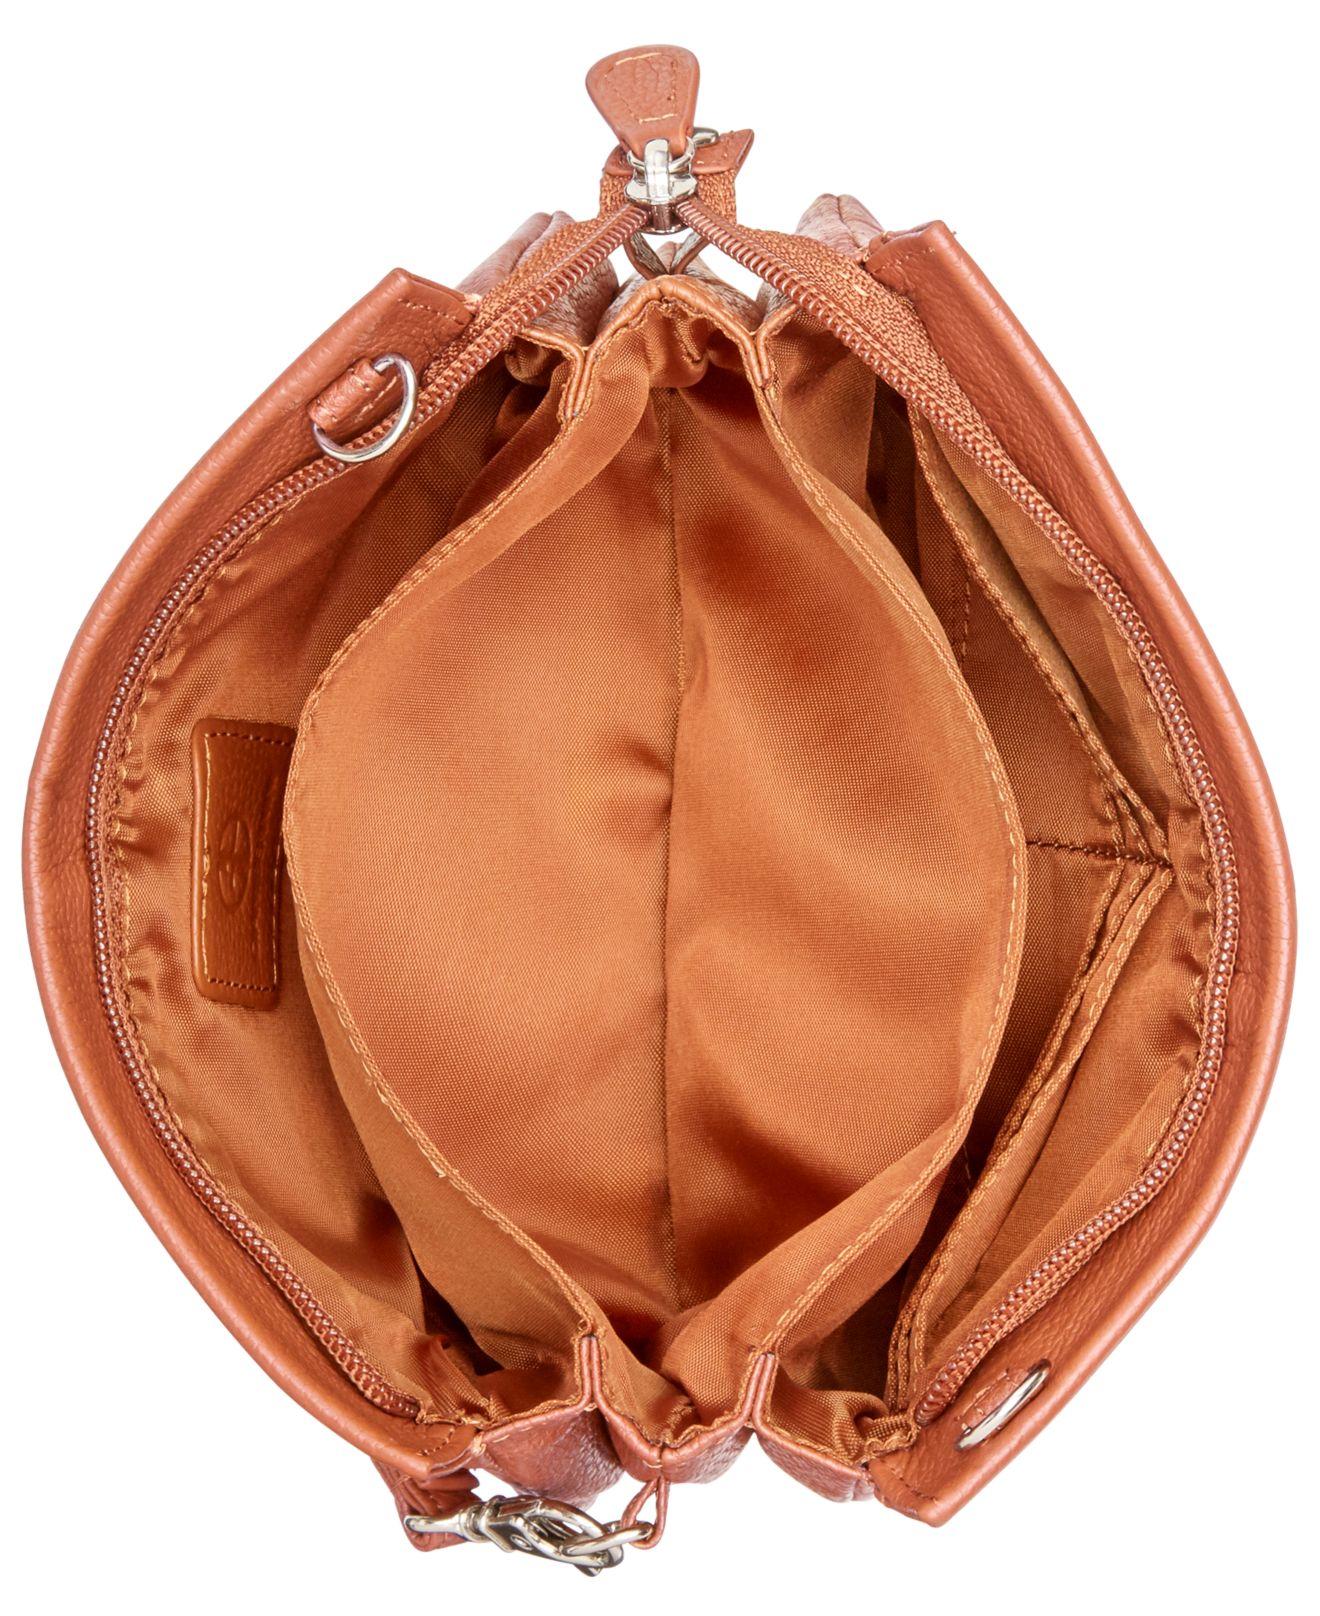 Giani Bernini Wallet - Leather  Leather wallet, Leather, Giani bernini